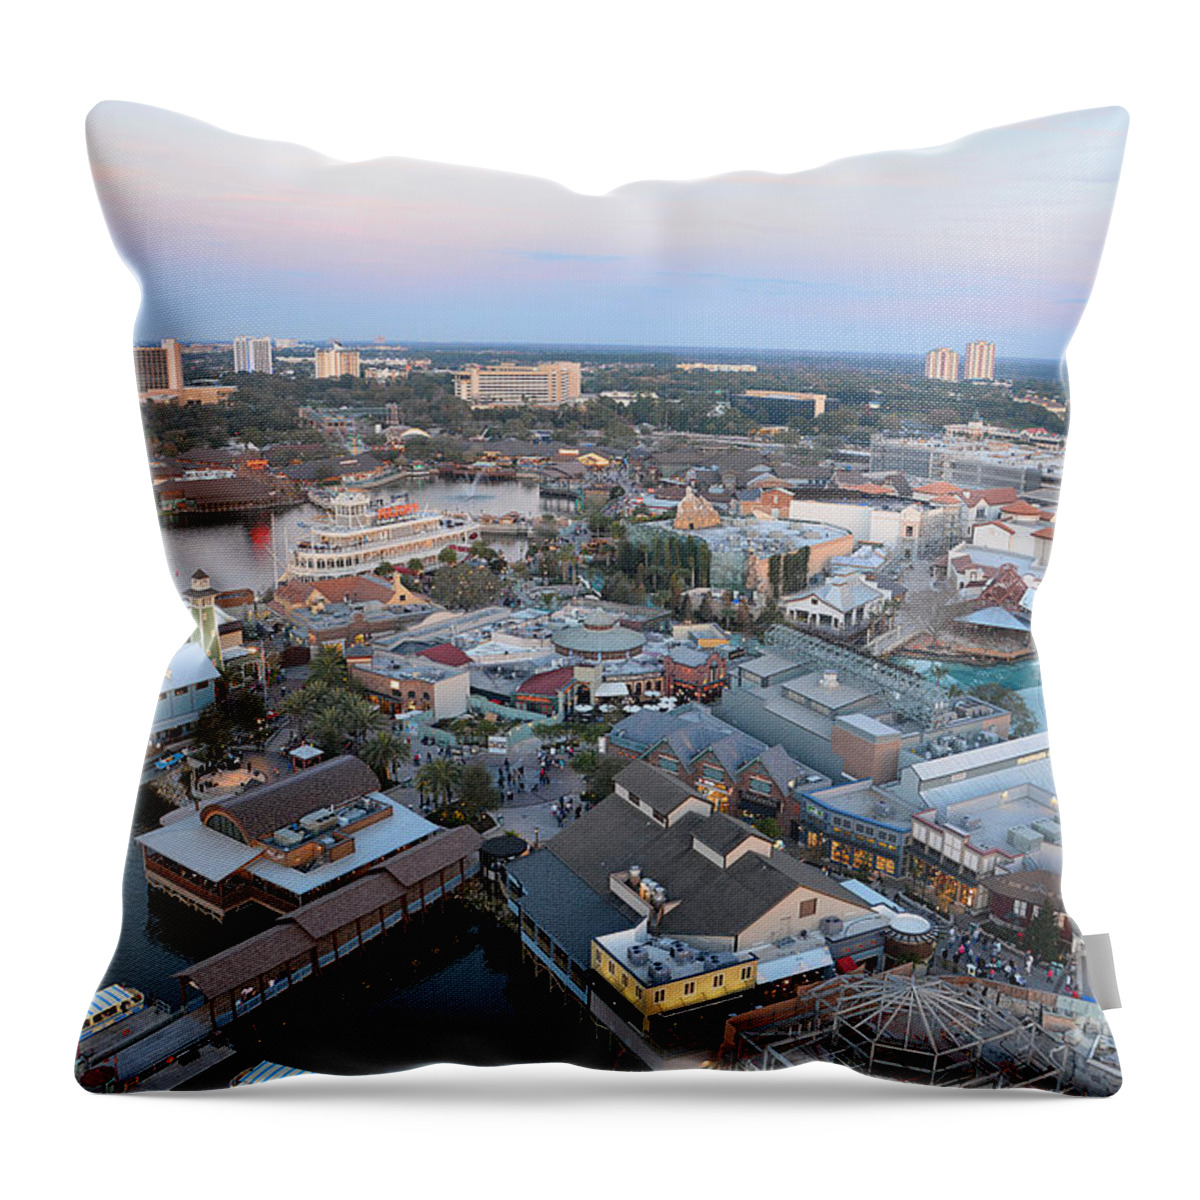 Disney Springs Throw Pillow by Cindy Manero - Pixels